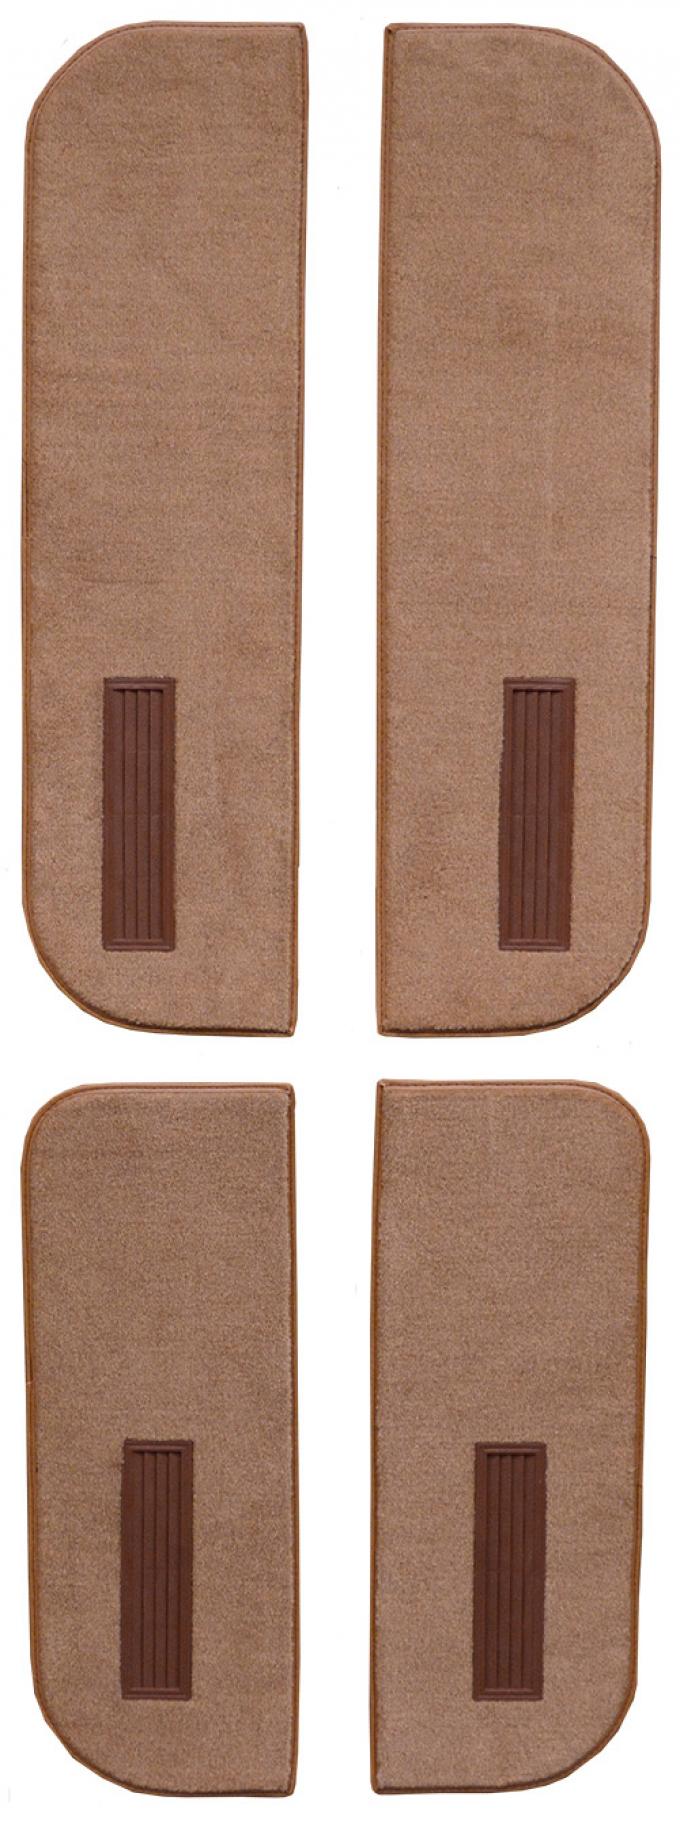 ACC 1989-1991 Chevrolet R1500 Suburban Door Panel Inserts on Cardboard w/Vents 4pc Cutpile Carpet